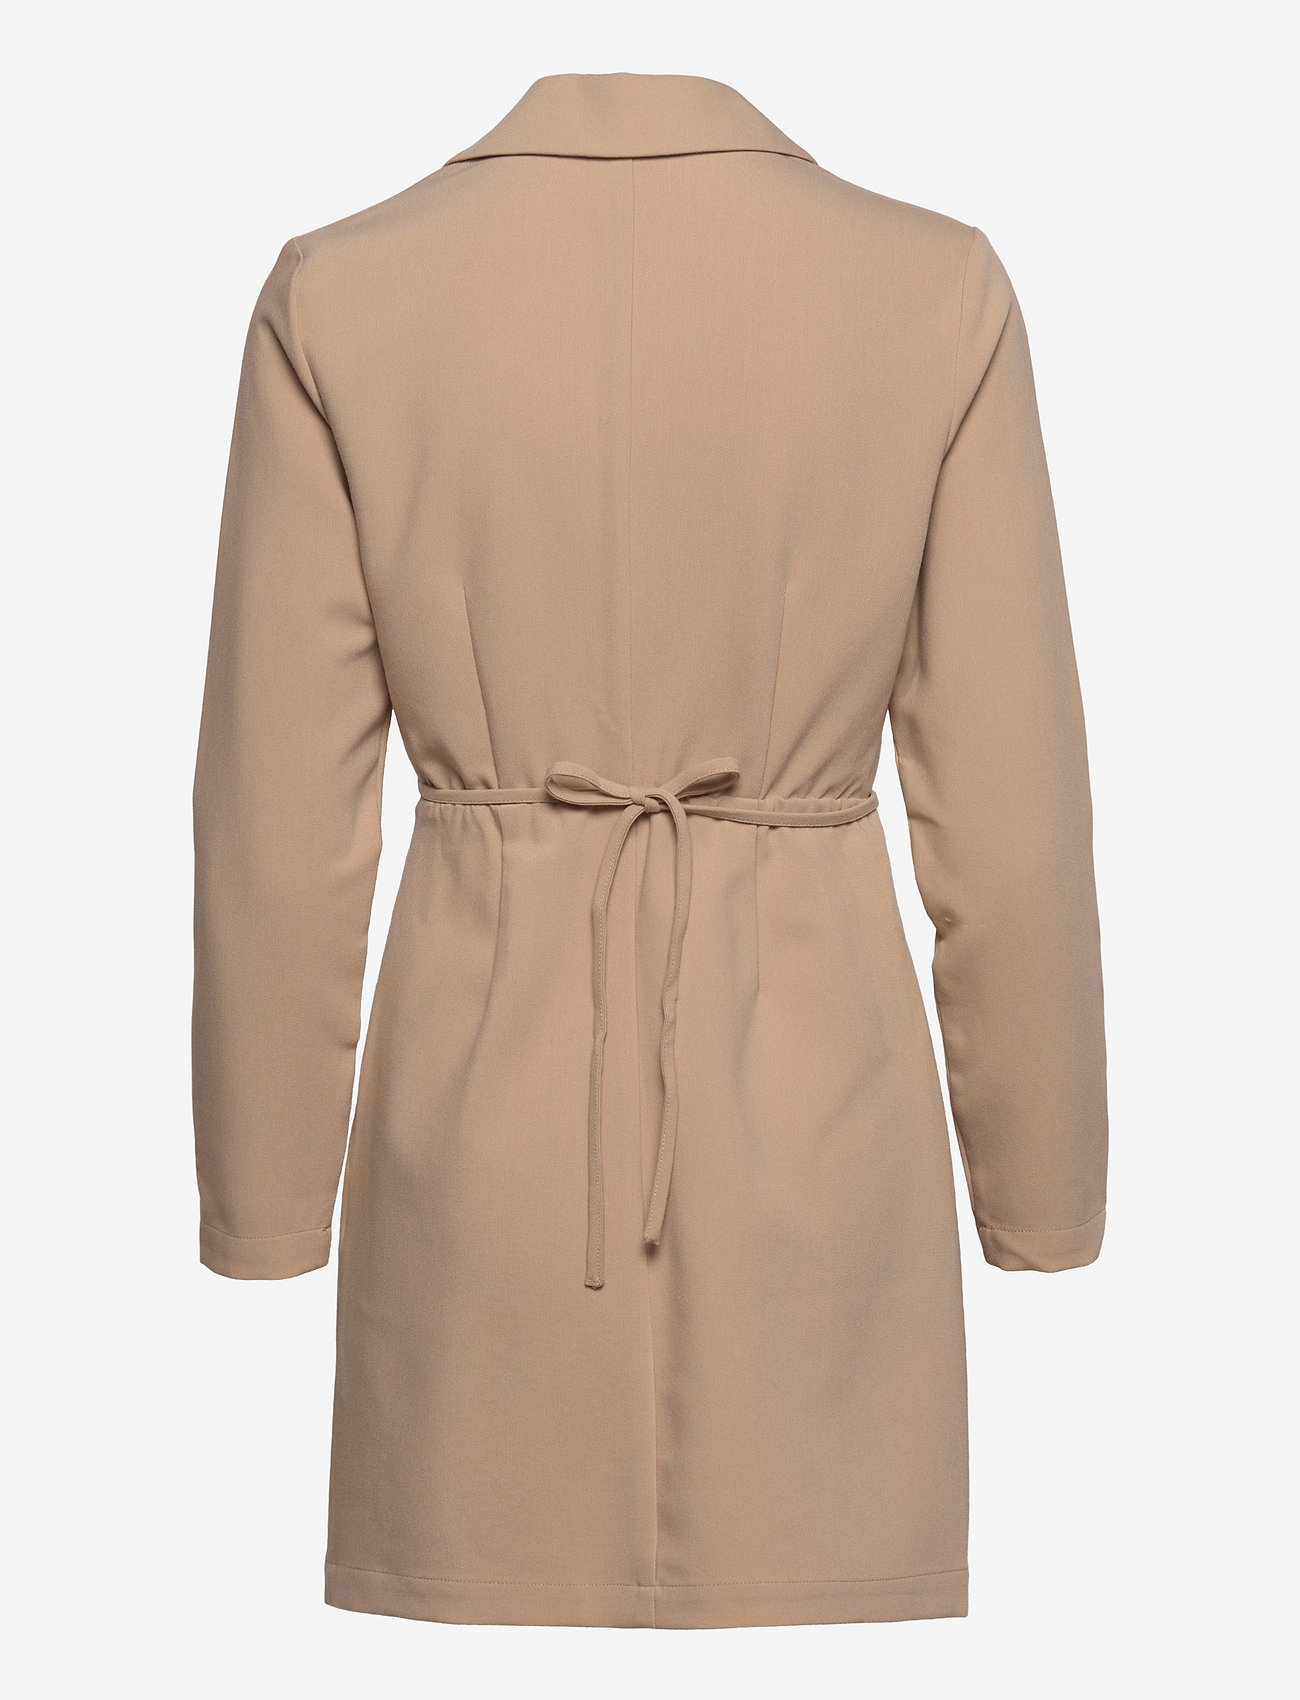 Abercrombie & Fitch - ANF WOMENS DRESSES - Īsas kleitas - brown solid - 1